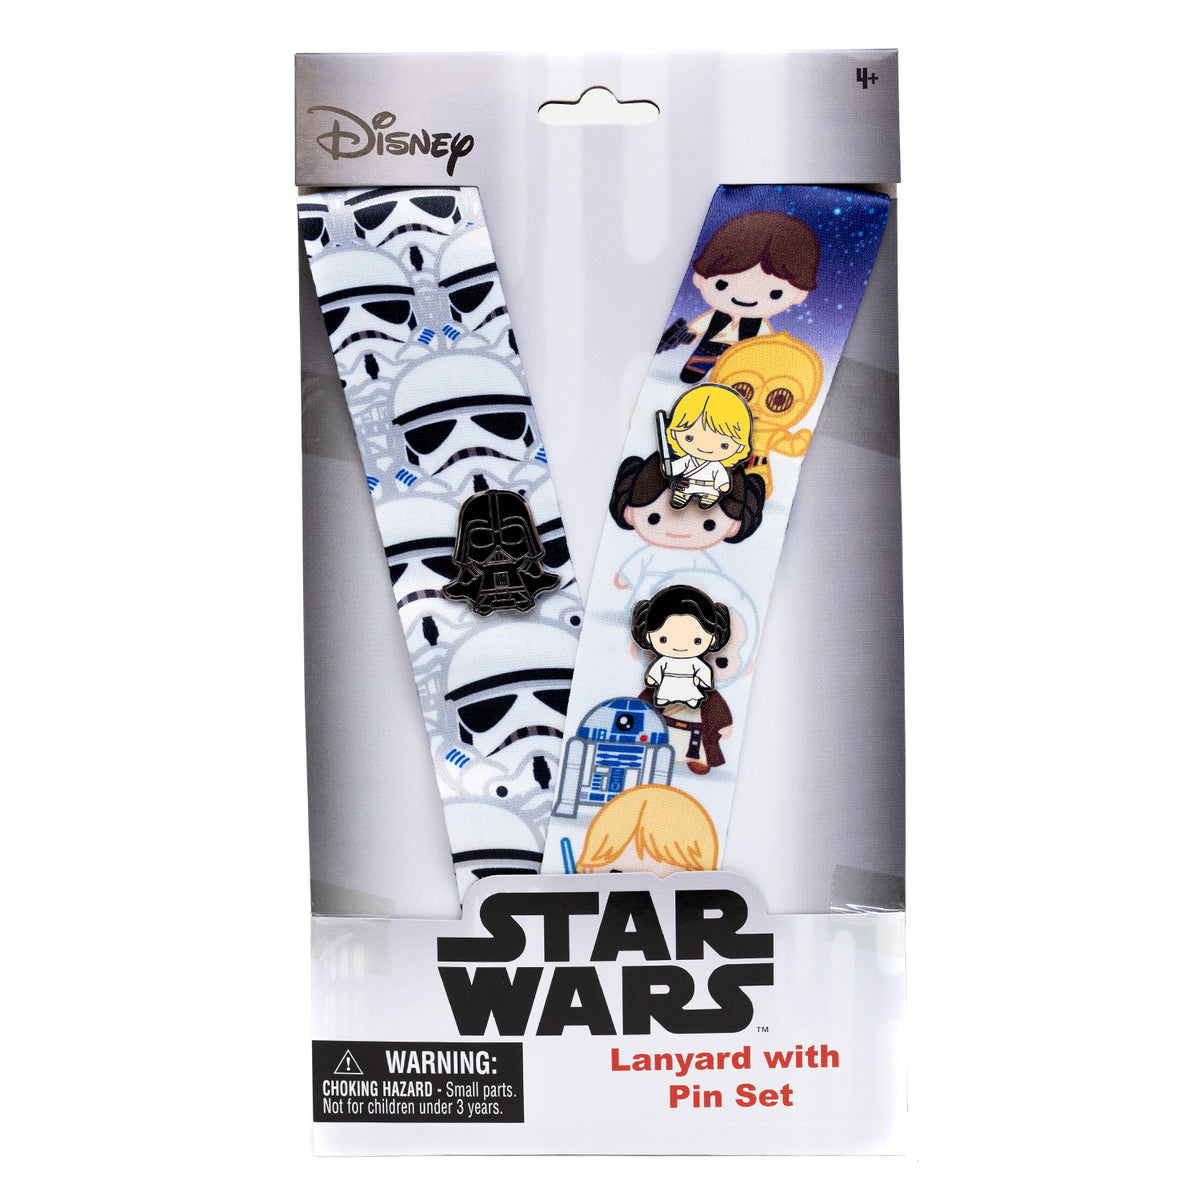 Disney D23 2019 Star Wars Lanyard with 3 Piece Pin Set